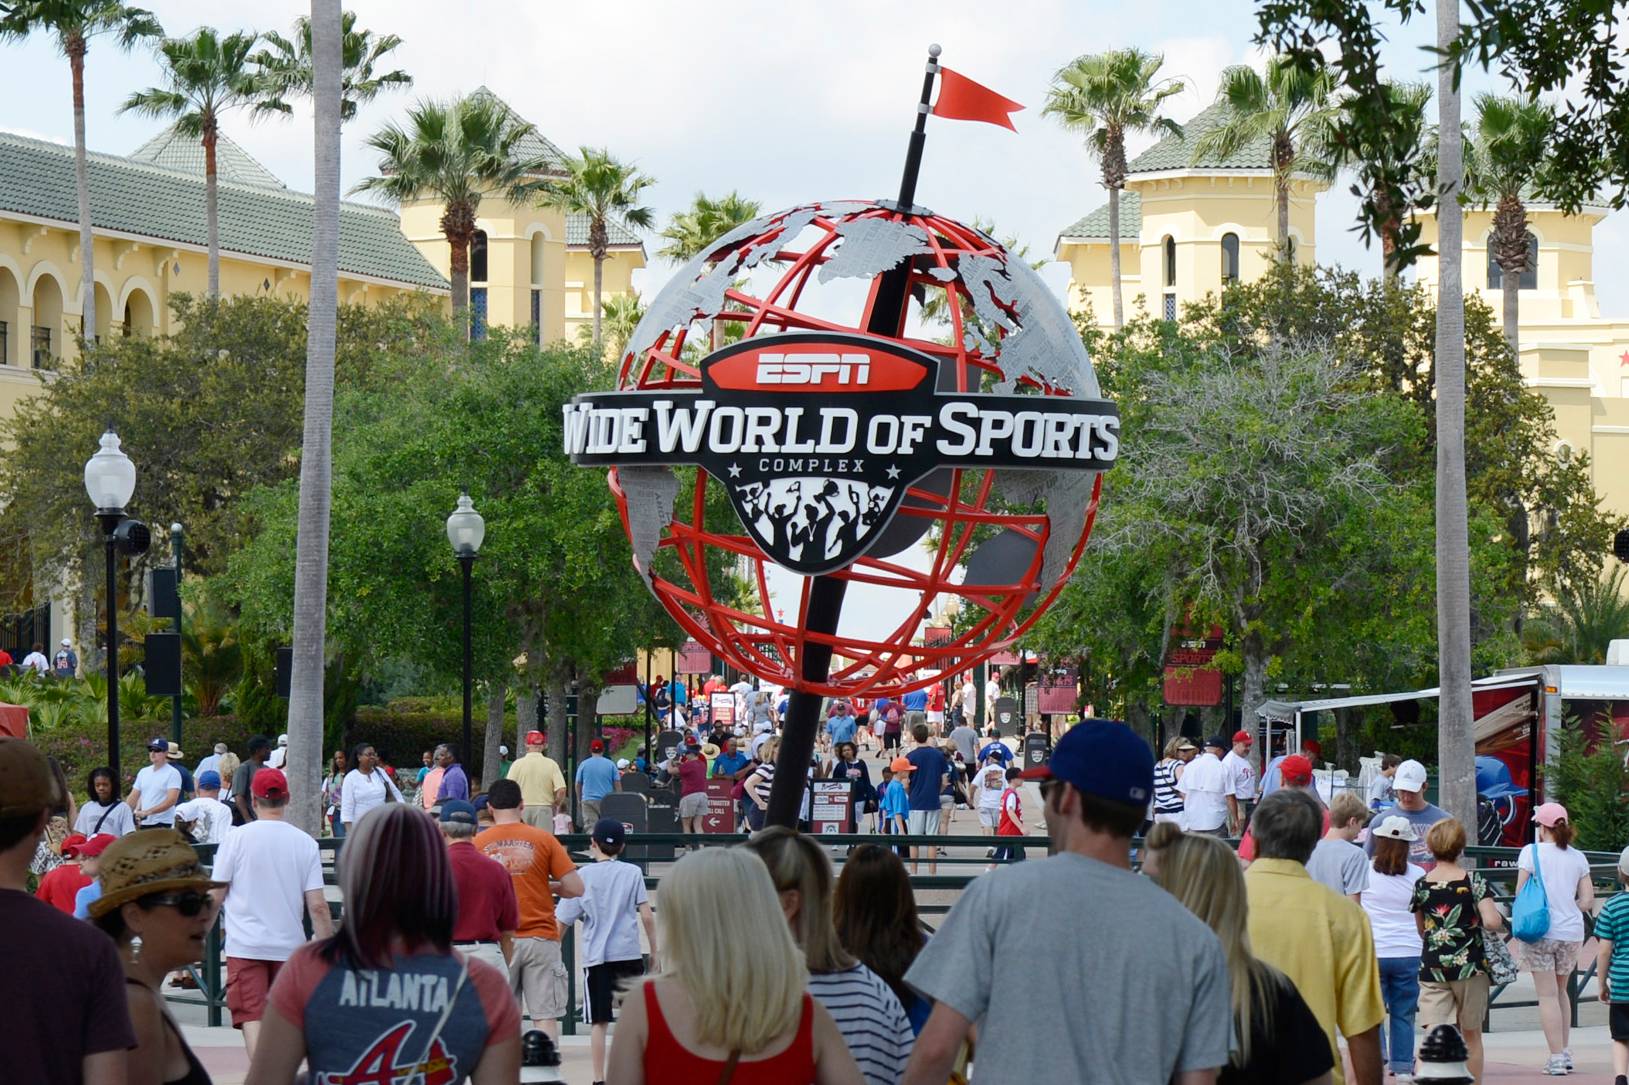 ESPN Wide World of Sports. Photo Copyright The Walt Disney Company 2015.